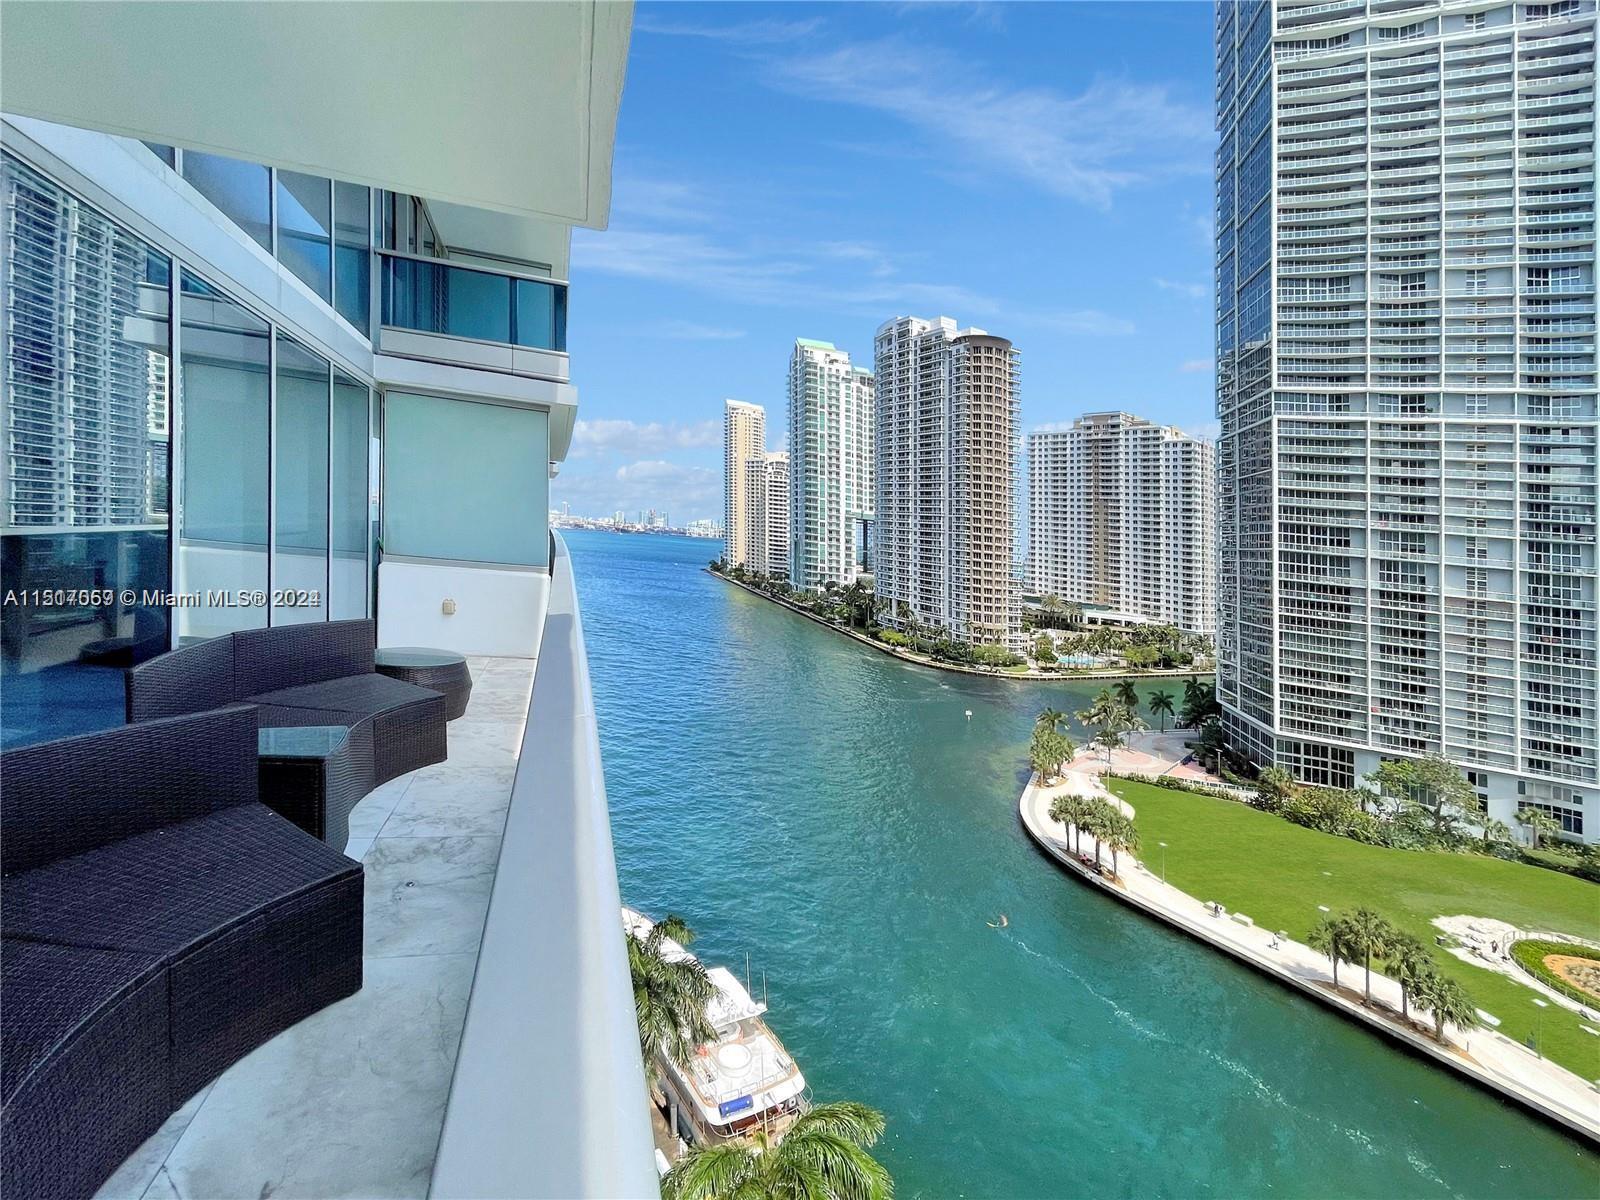 Rental Property at 200 Biscayne Boulevard Way 1107, Miami, Broward County, Florida - Bedrooms: 2 
Bathrooms: 3  - $8,700 MO.